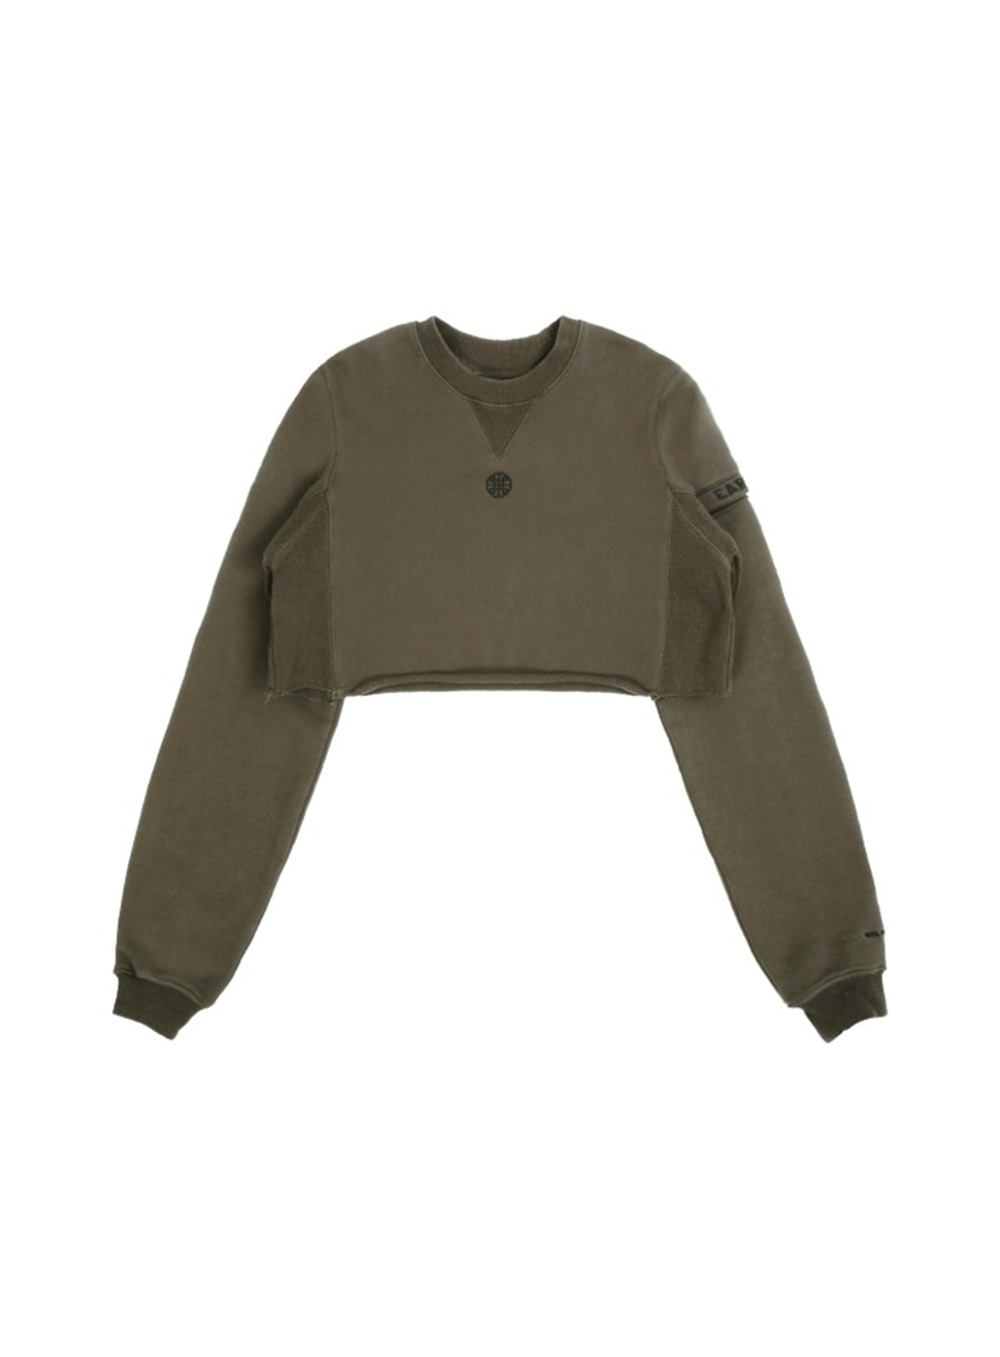 The Crop Sweatshirt - Military